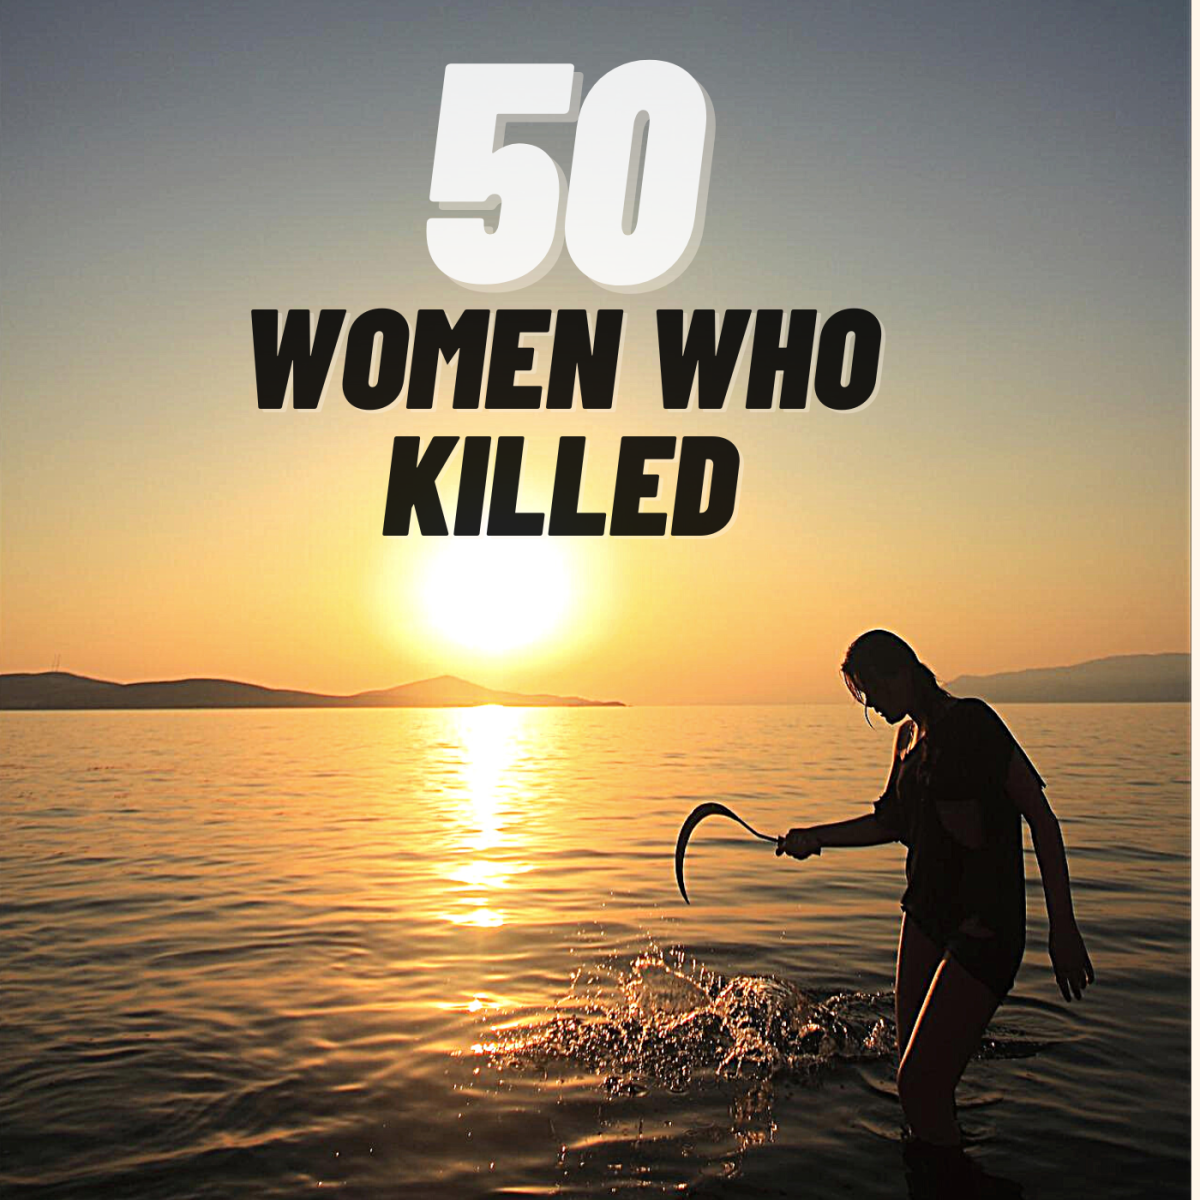 50 women who murdered